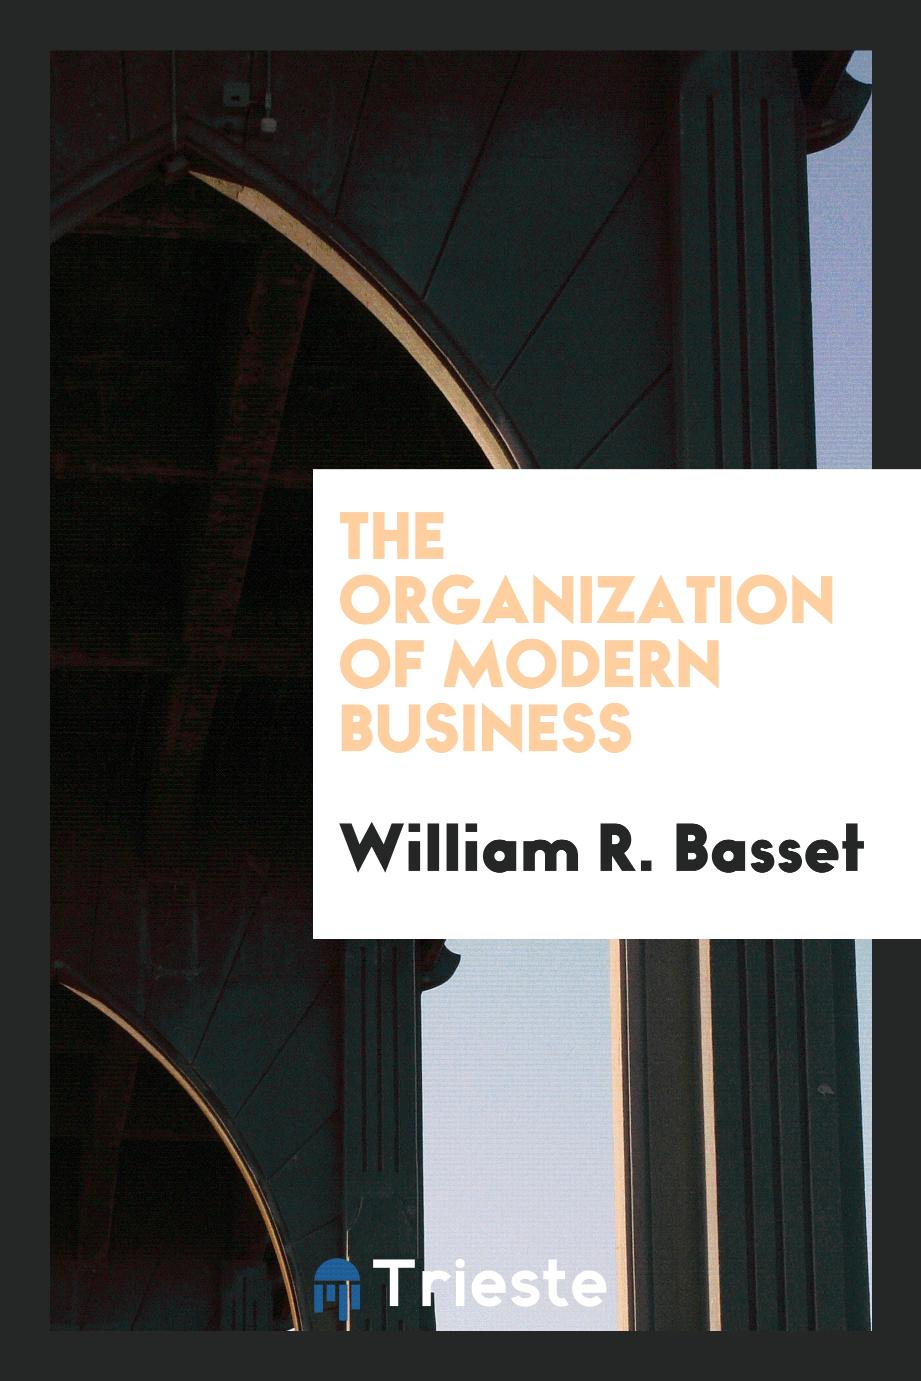 The organization of modern business